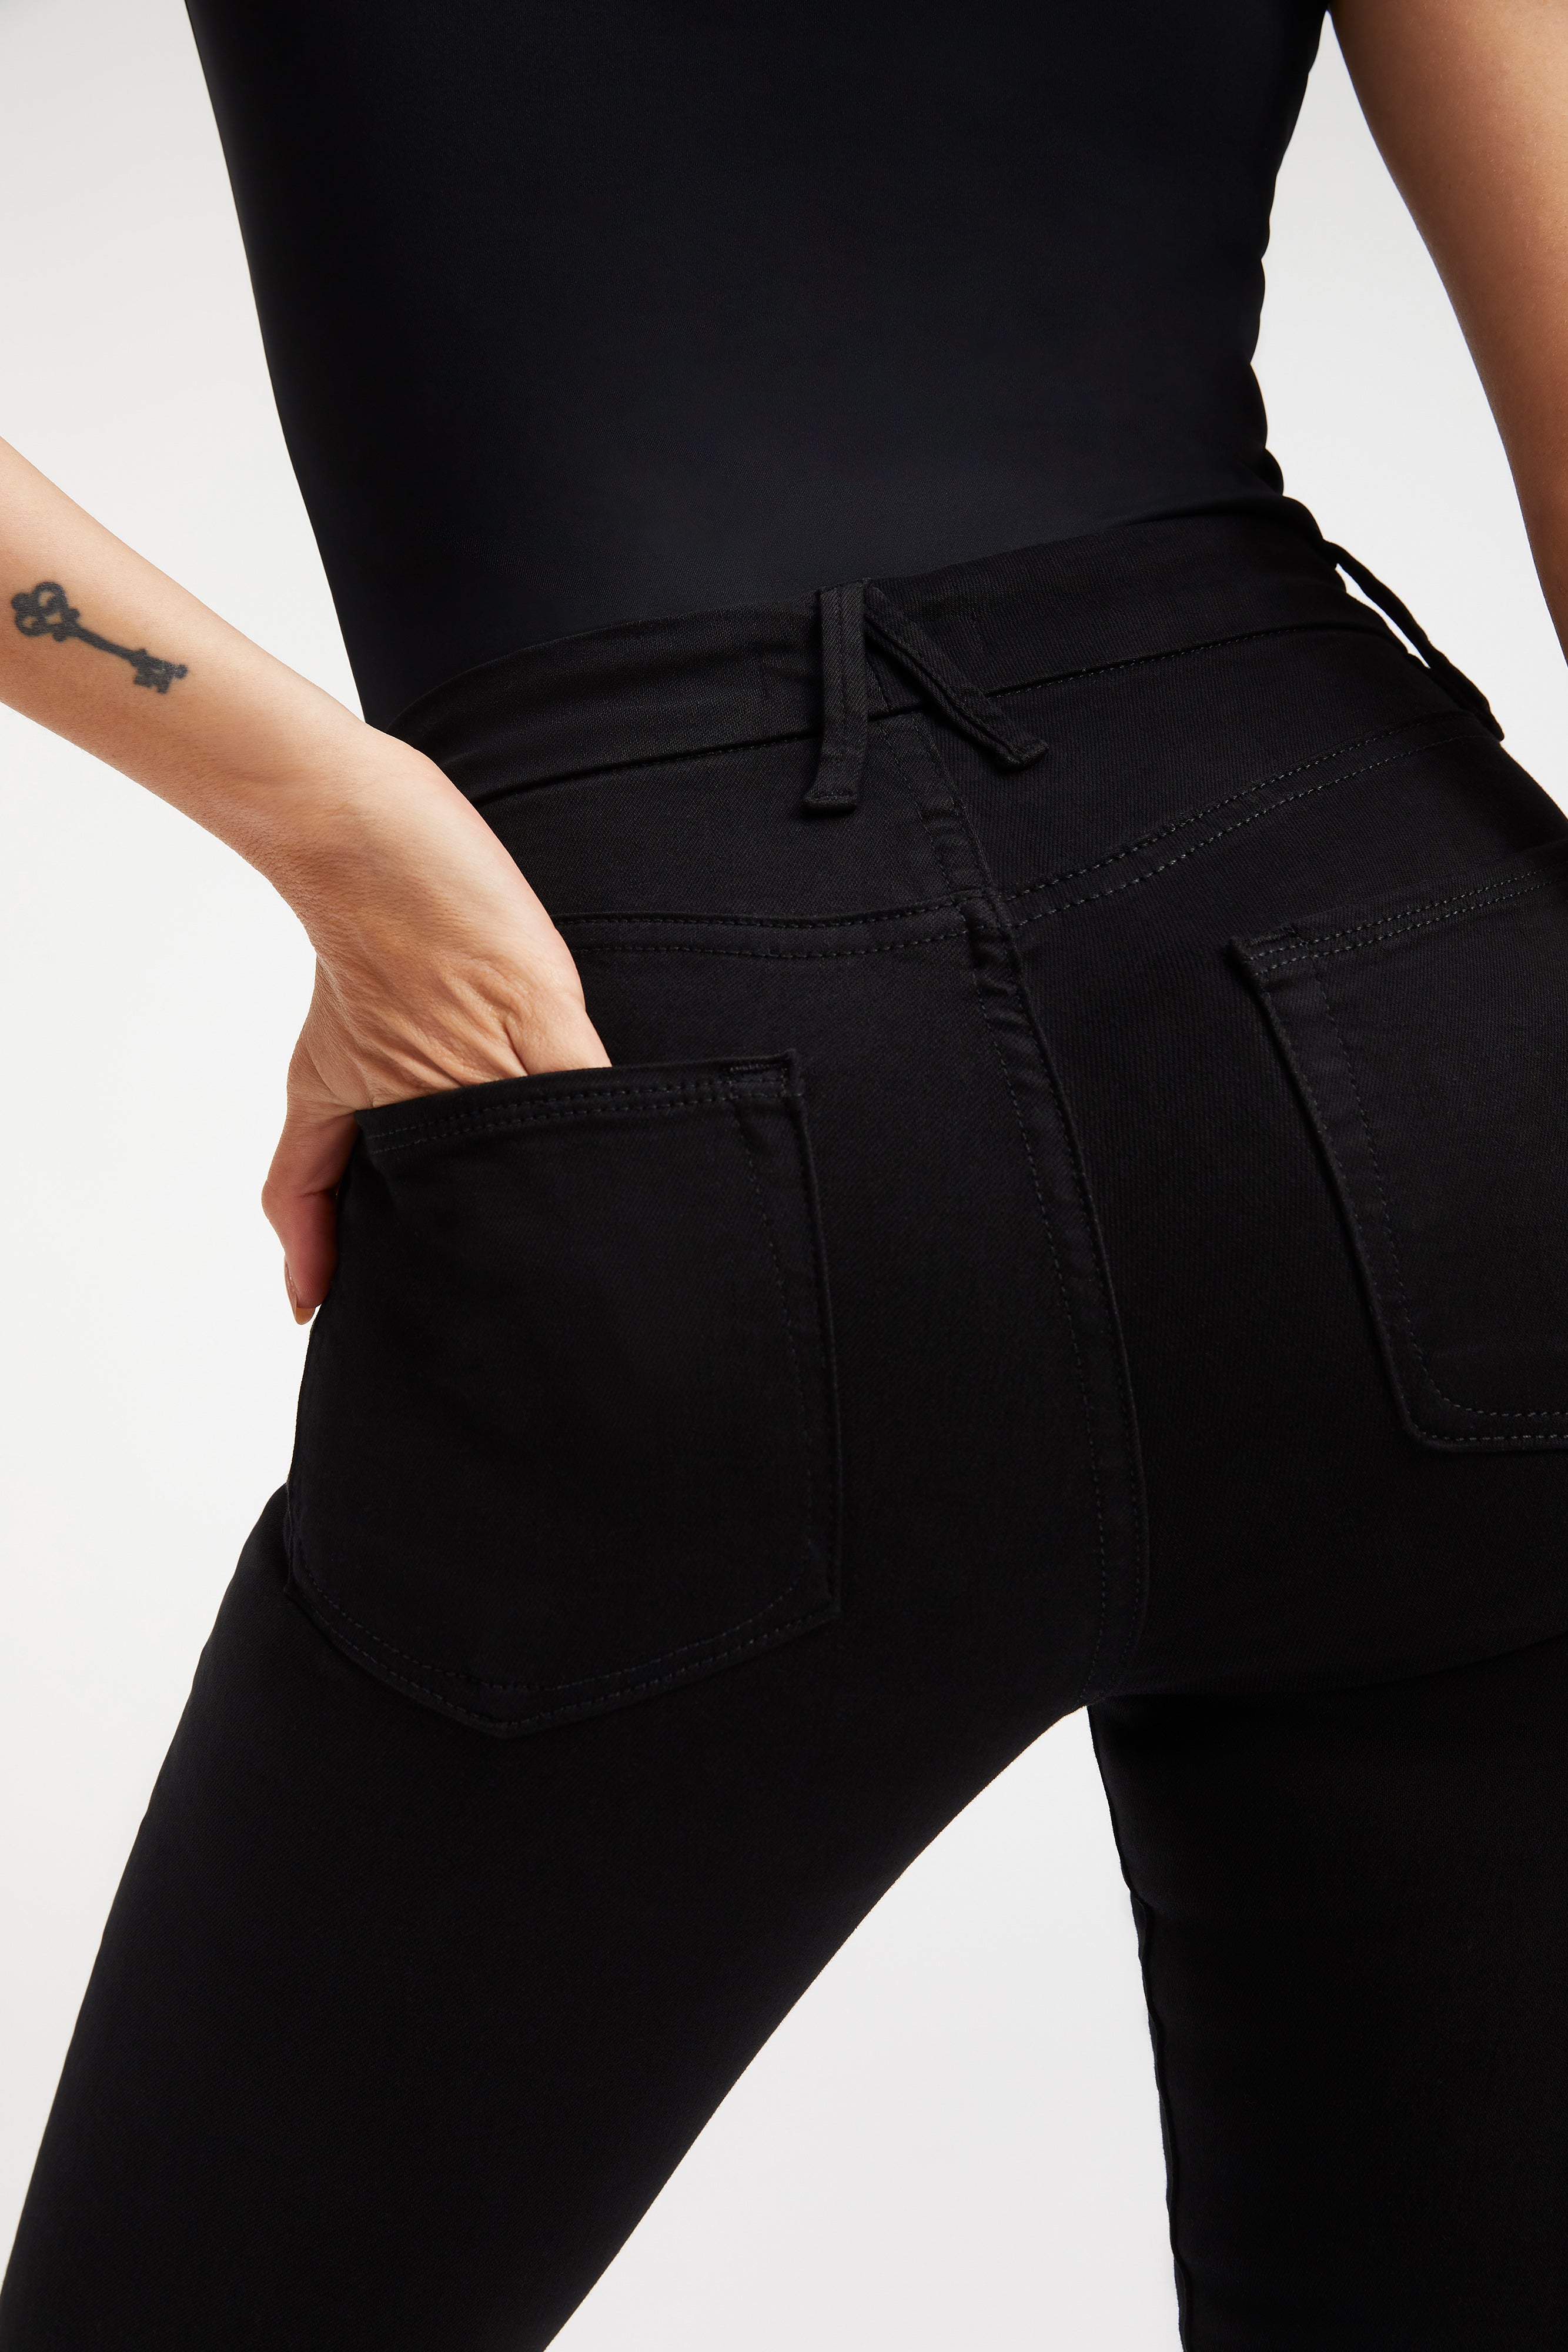 JEANS PANTS Maong For Casual Black Mens Jeans Pants Korean Skinny  Strechable 100% Denim black COD | Lazada PH